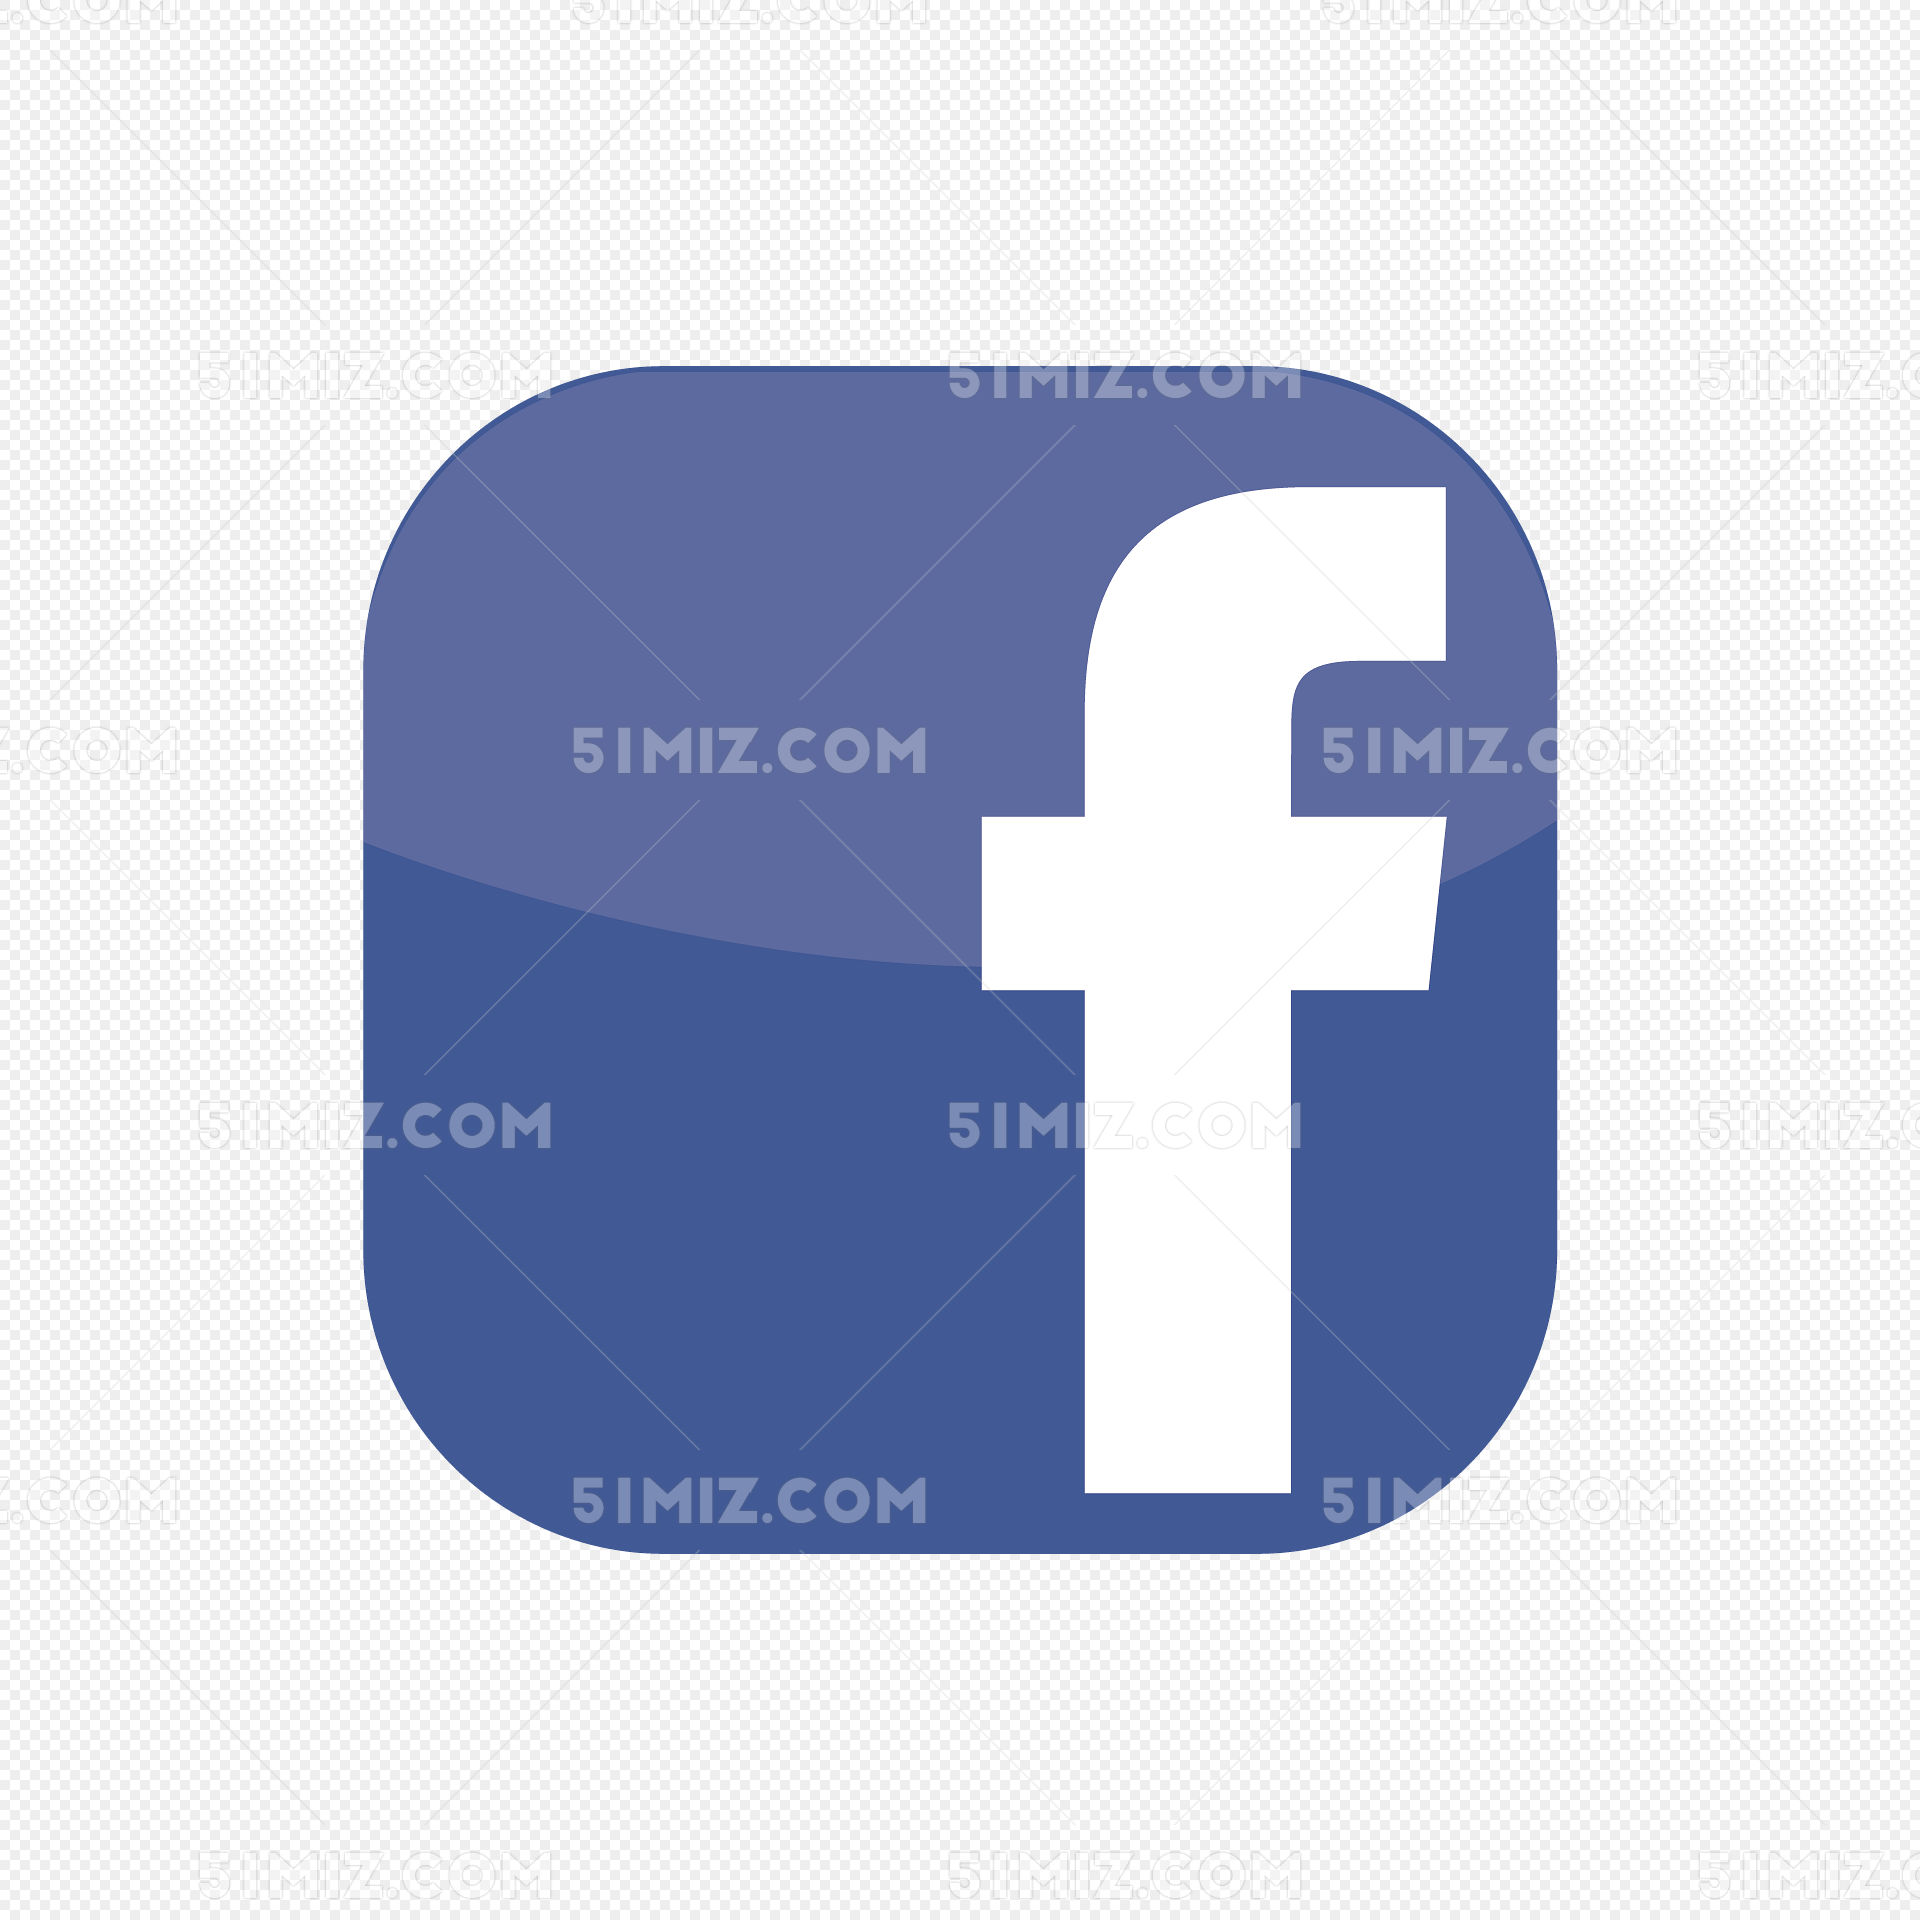 Facebook Logo Icona Di - Grafica vettoriale gratuita su Pixabay - Pixabay